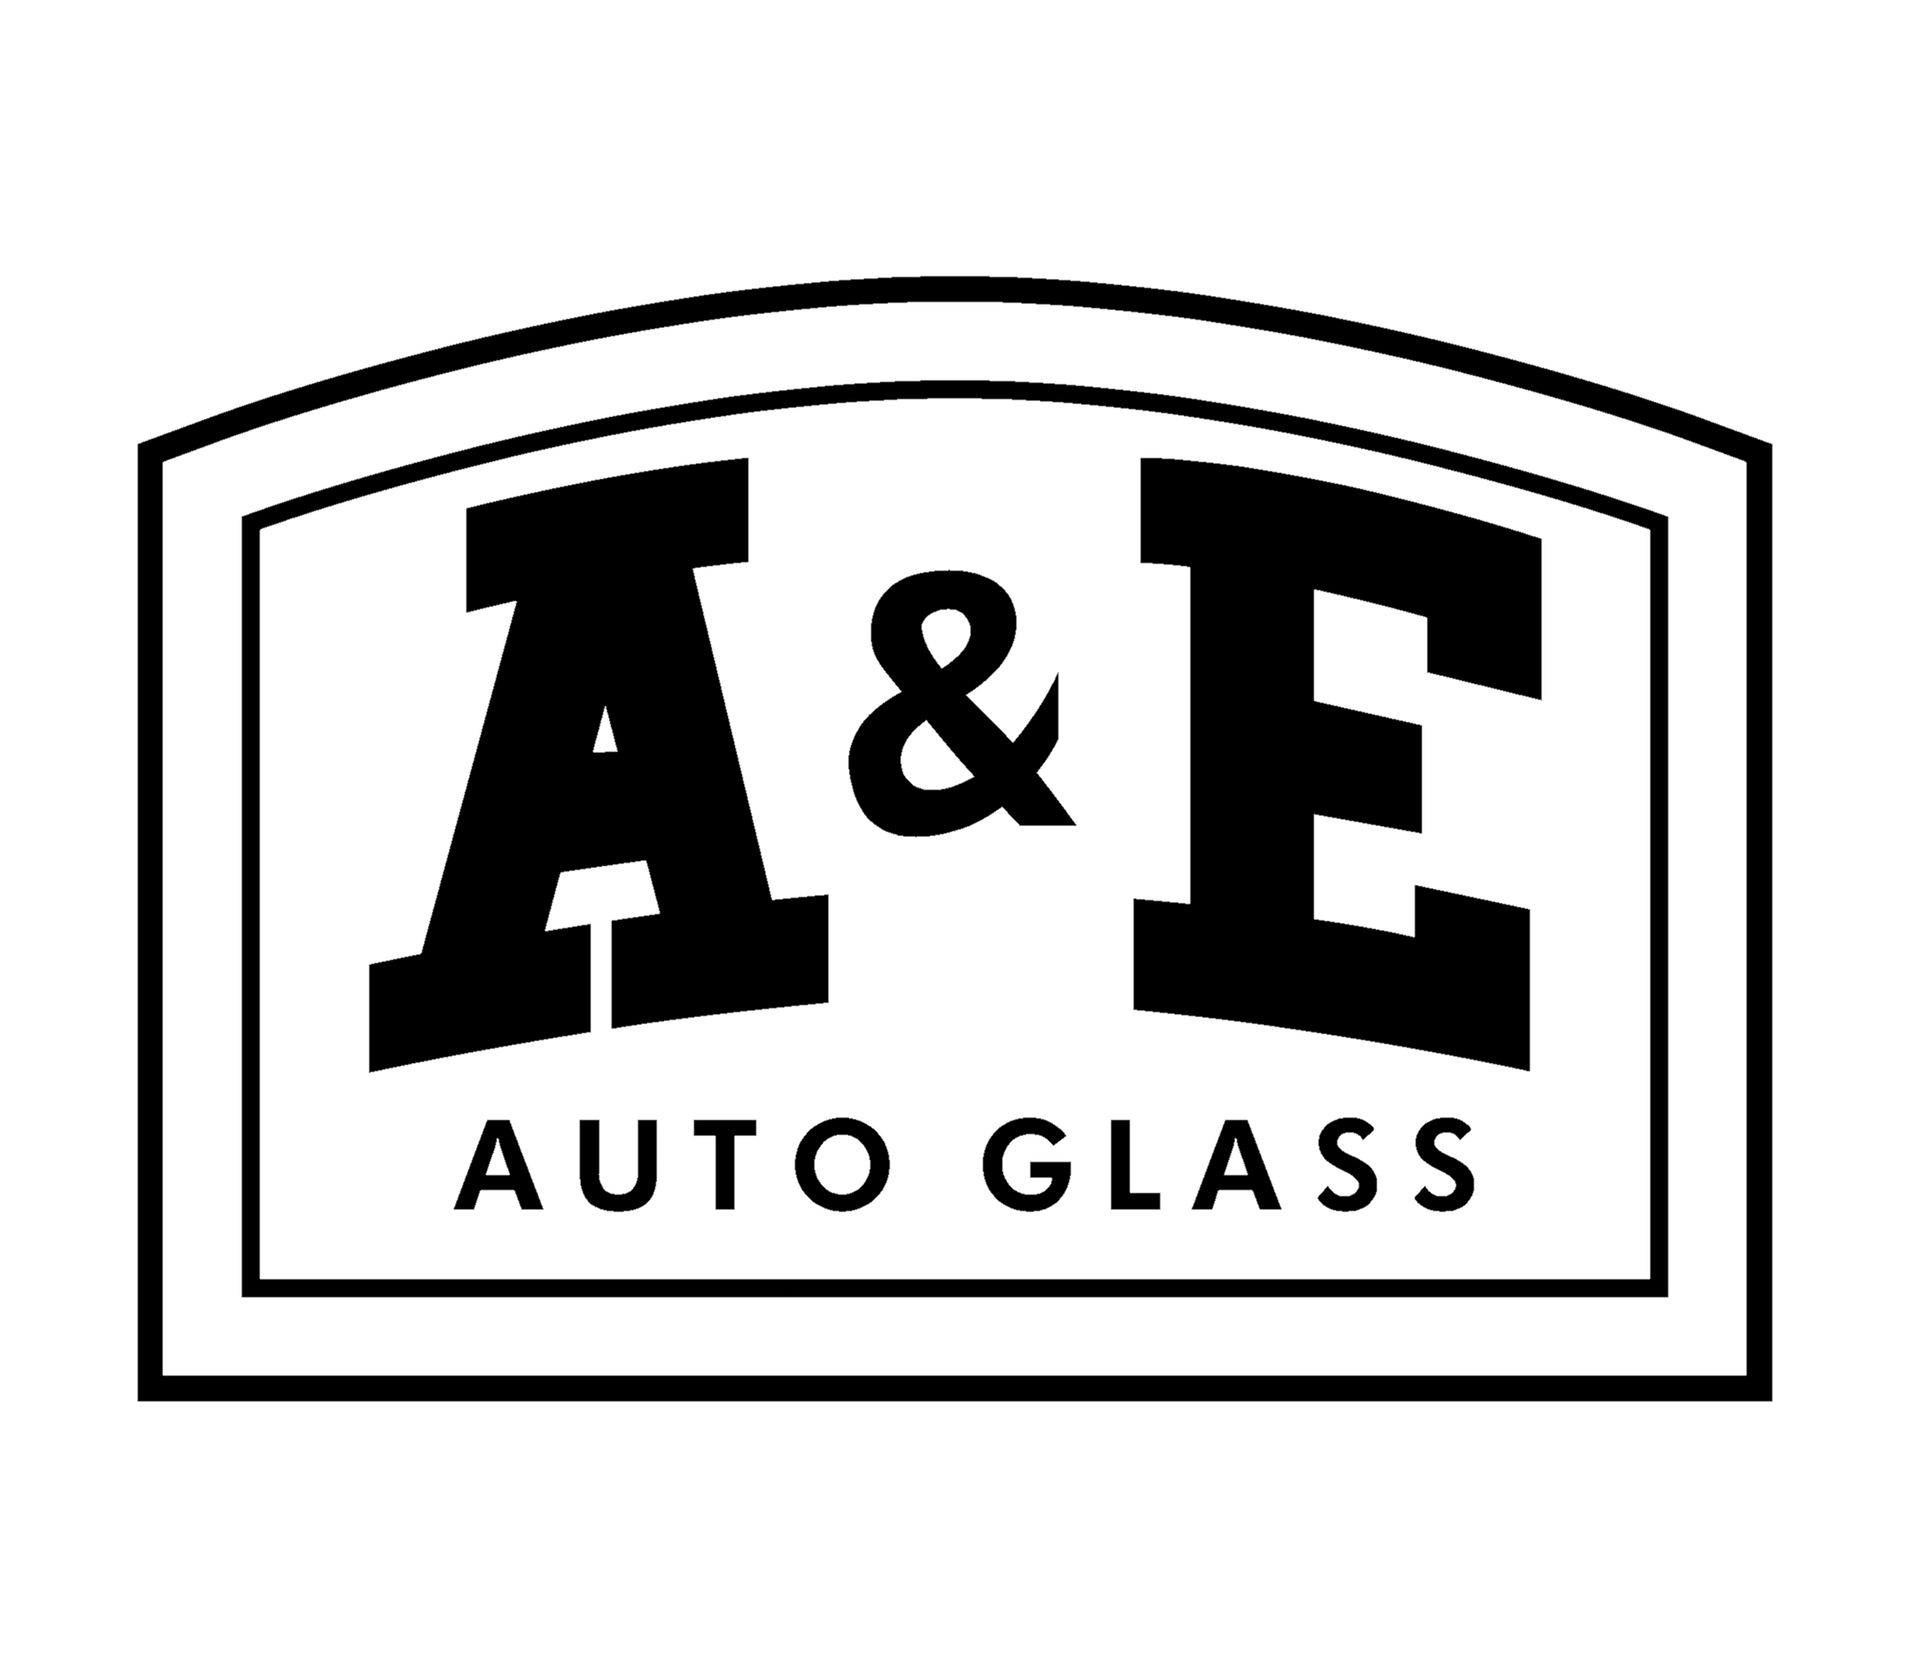 A & E Auto Glass Windshield Replacement AZ